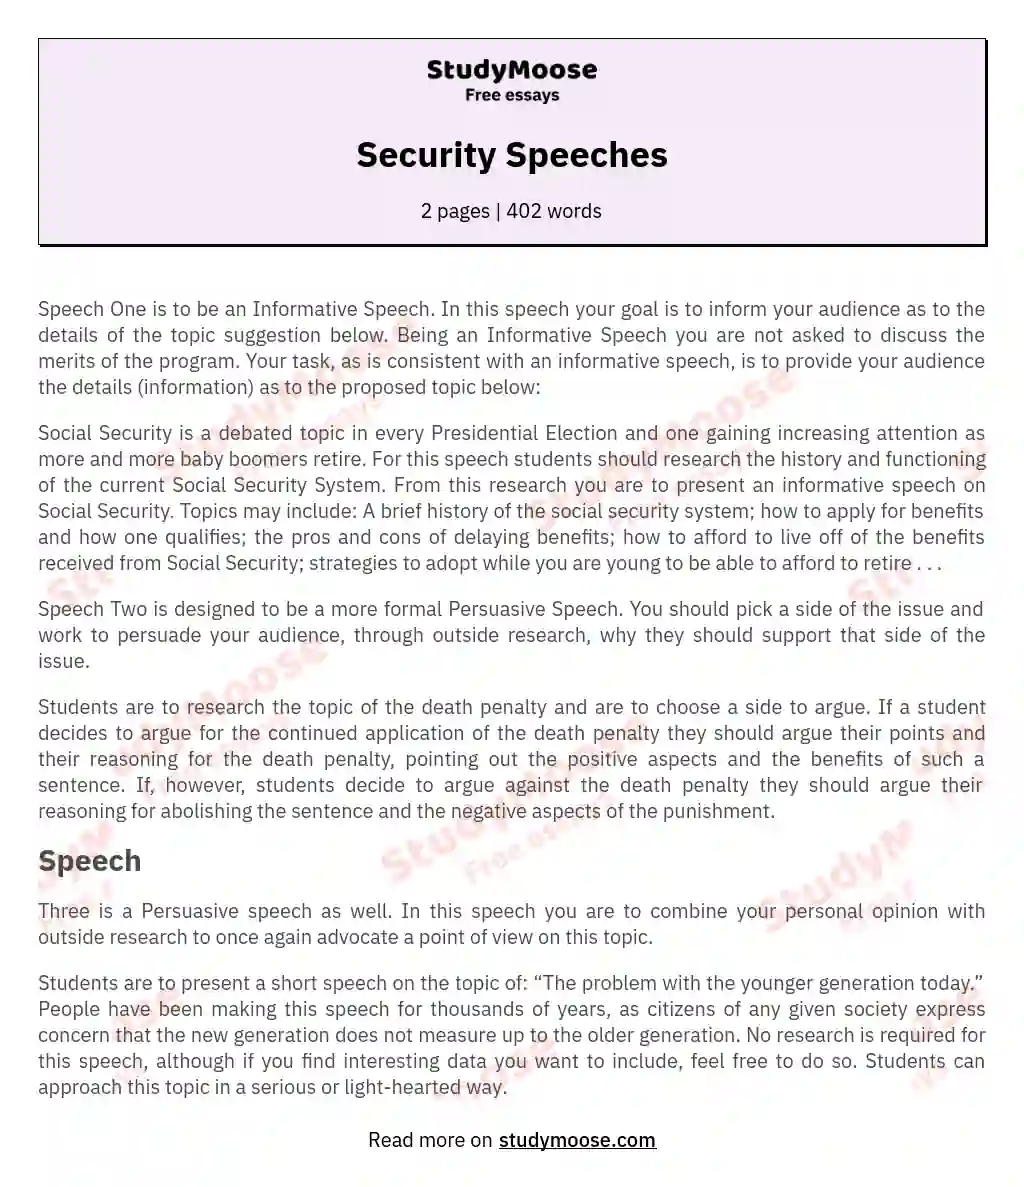 Security Speeches essay